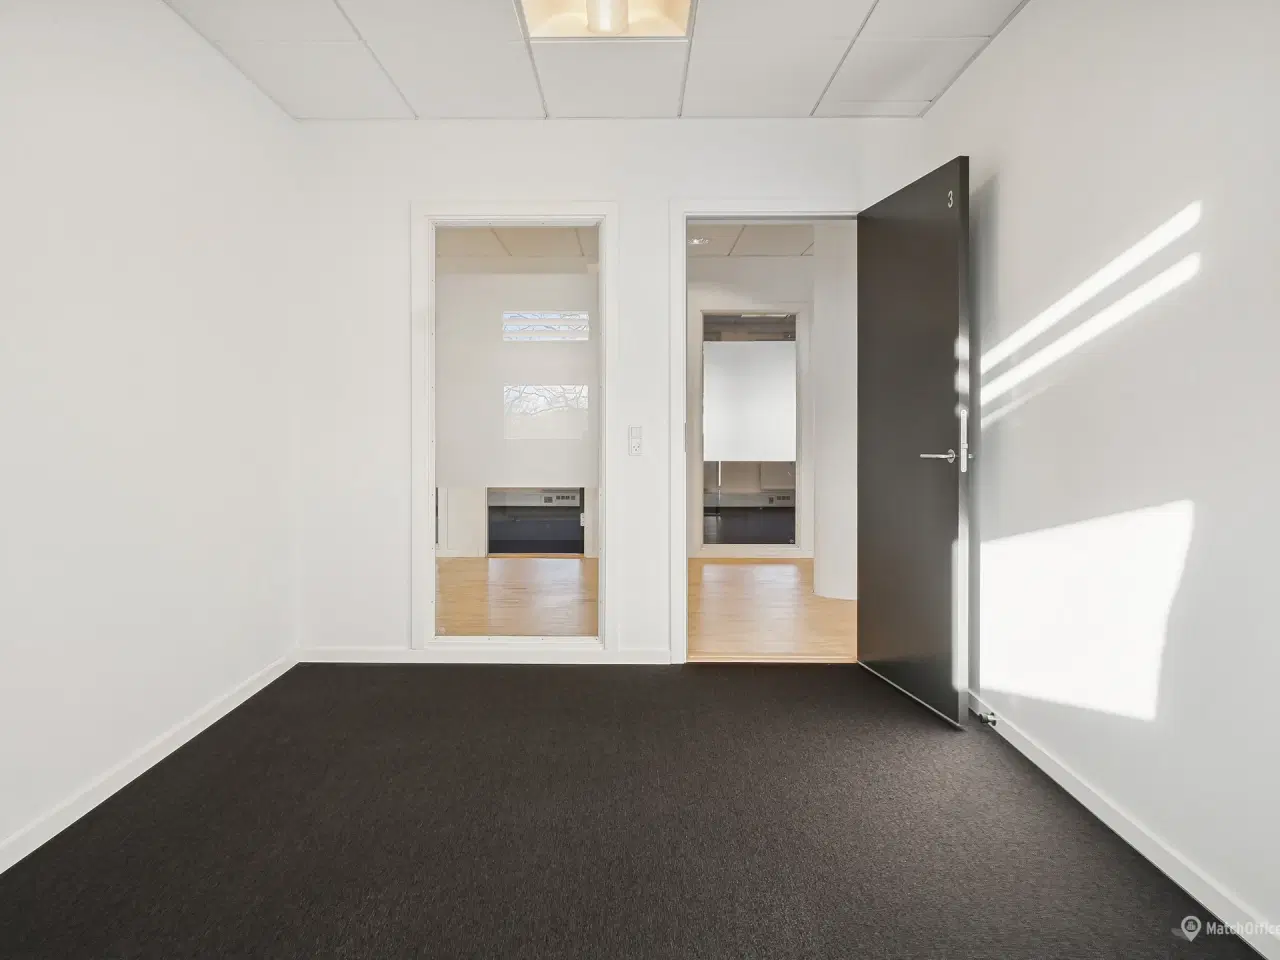 Billede 9 - Lyse og moderne kontorlokaler med rå kant